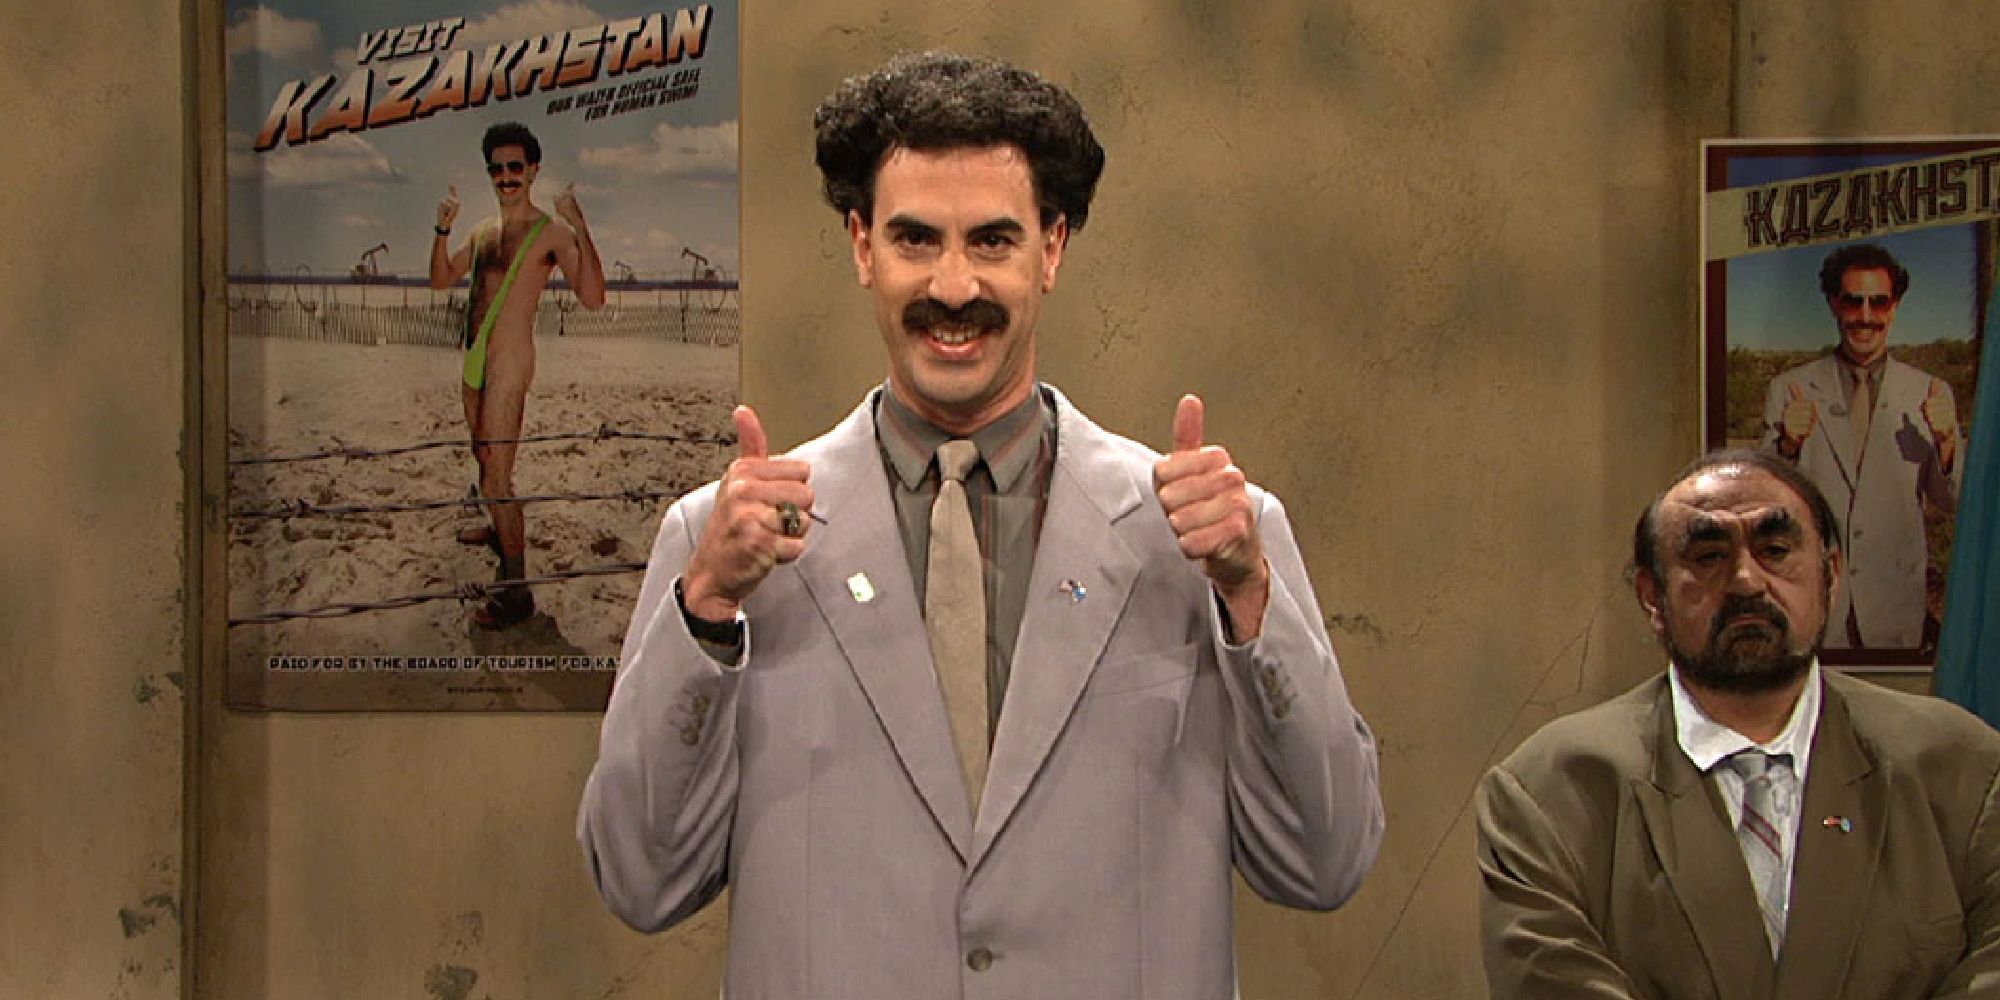 Sacha Baron Cohen appearing as Borat in an SNL cold open alongside Ken Davitian